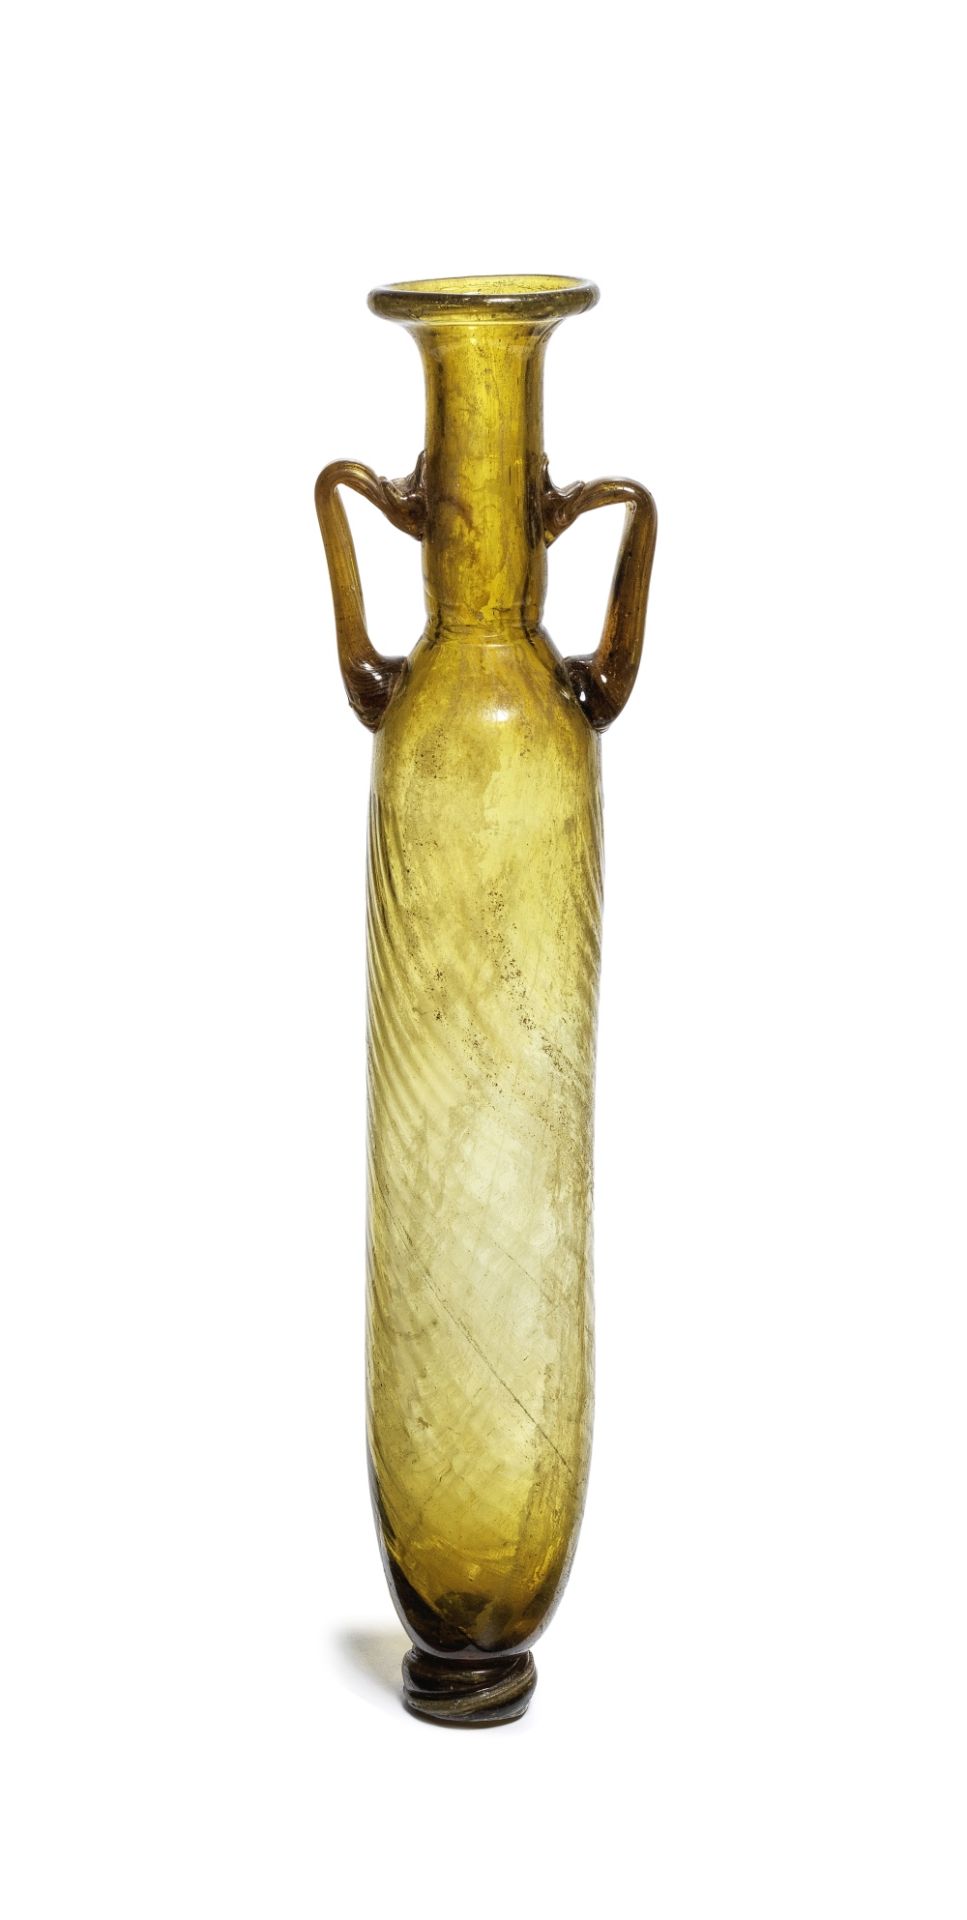 A tall Roman amber glass amphora